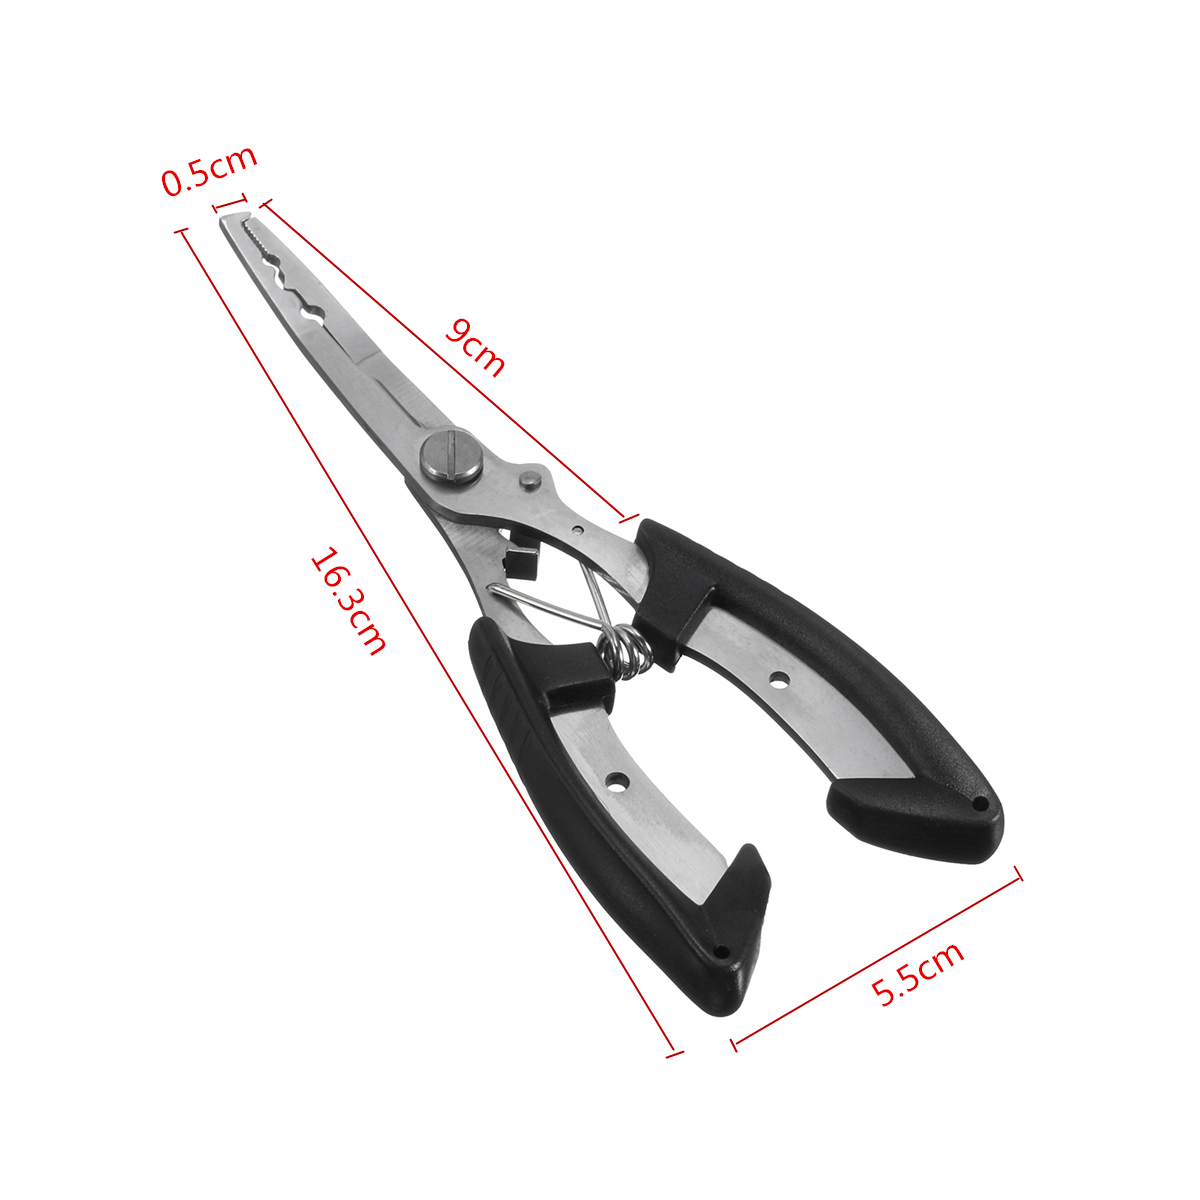 Stainless-Steel-Fishing-Pliers-Plierweiter-Scissors-Line-Cutter-Hook-Tackle-Tool-1151463-10